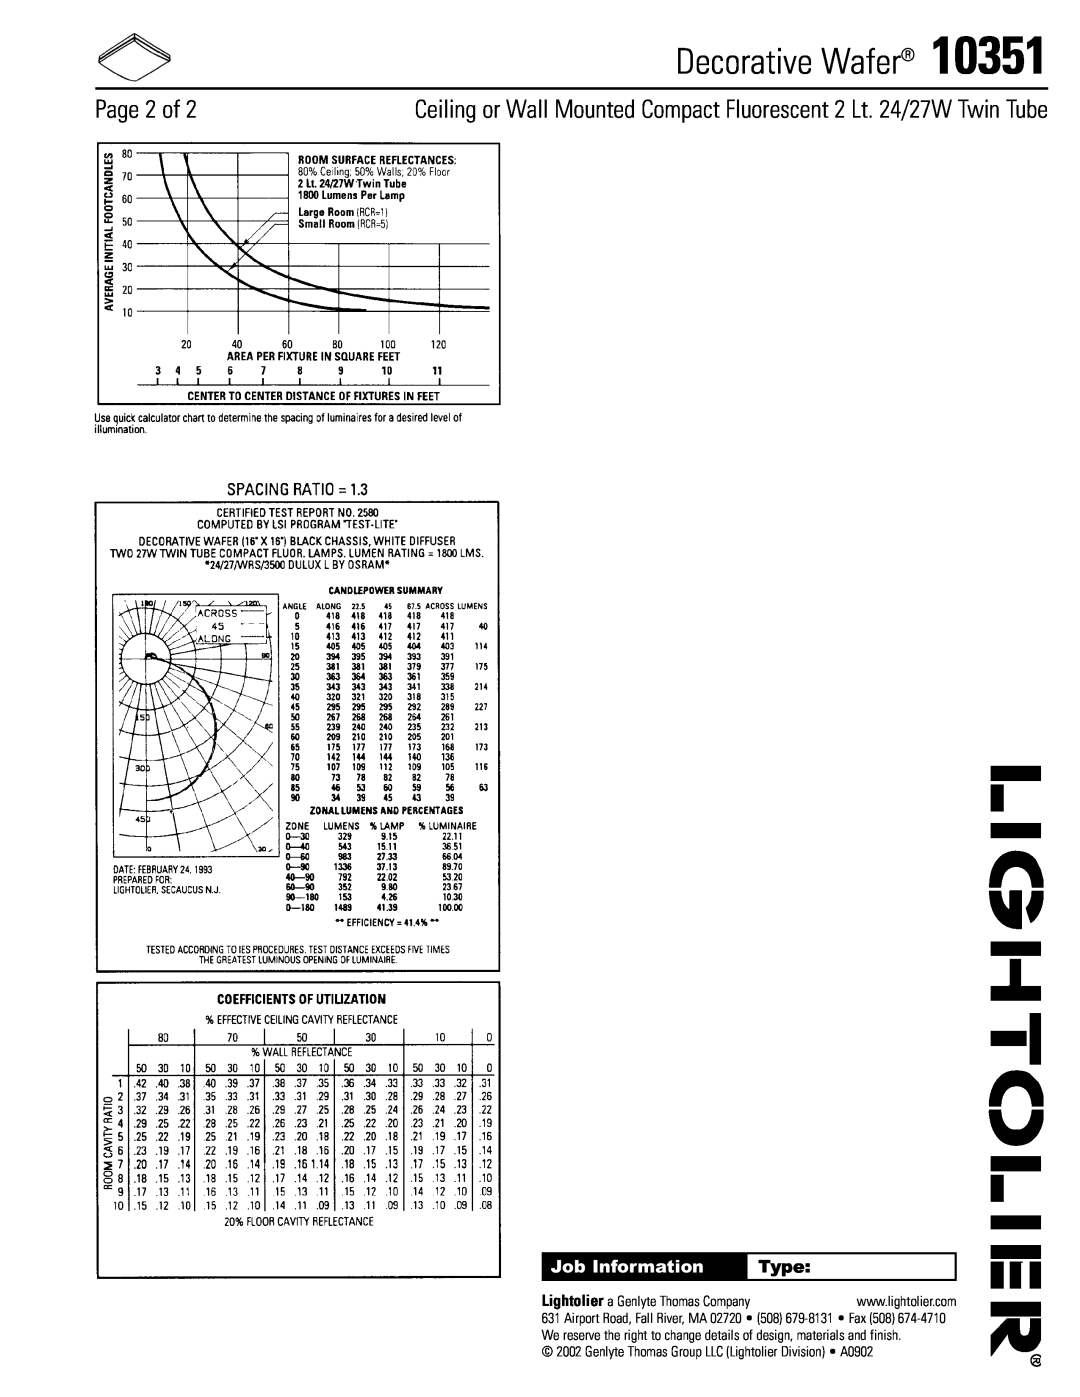 Lightolier 10351 manual Page 2 of, Type, Decorative Wafer, Job Information, Lightolier a Genlyte Thomas Company 